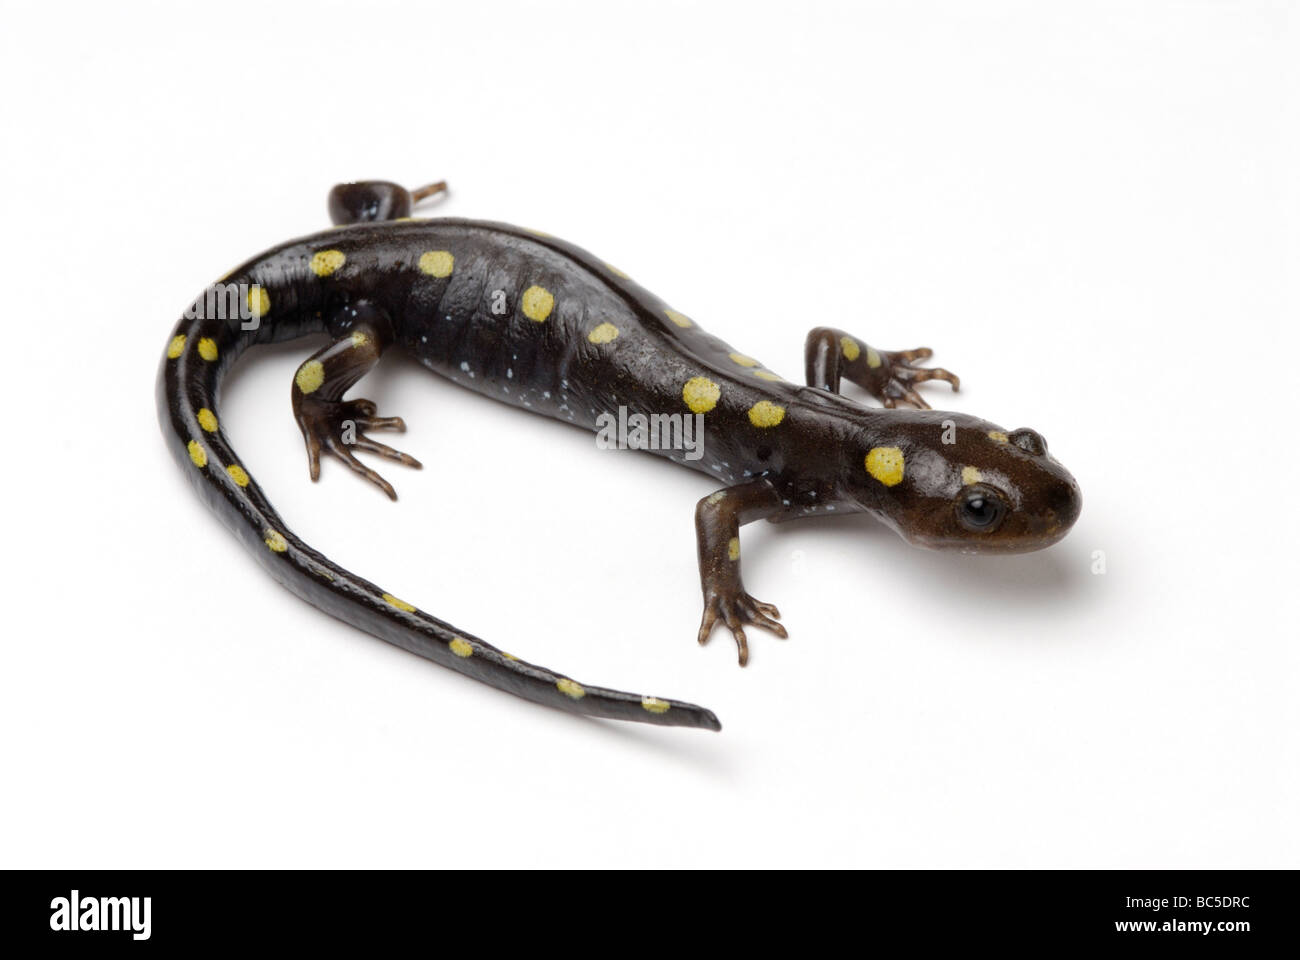 Salamander hi-res stock photography and images - Alamy